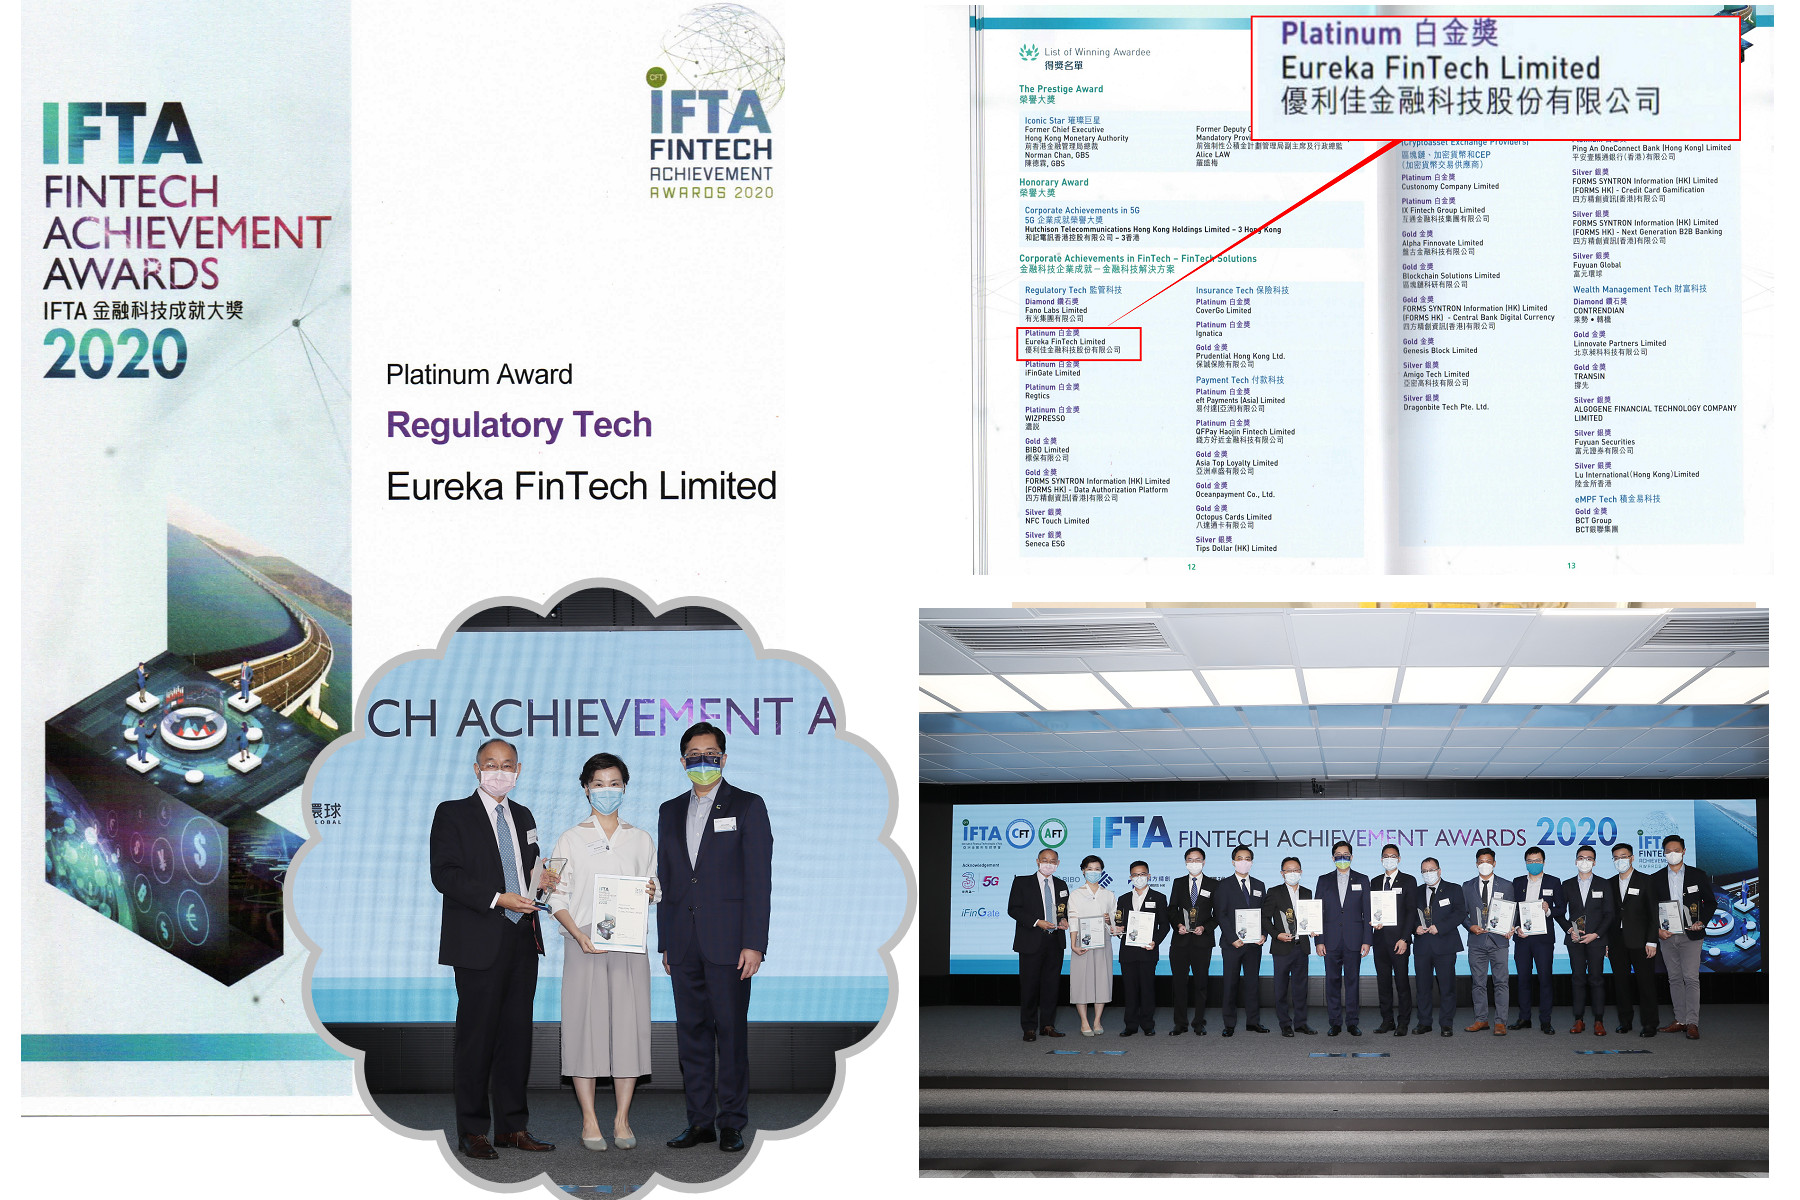 /assets/image/awards/IFTA-Awards.jpg